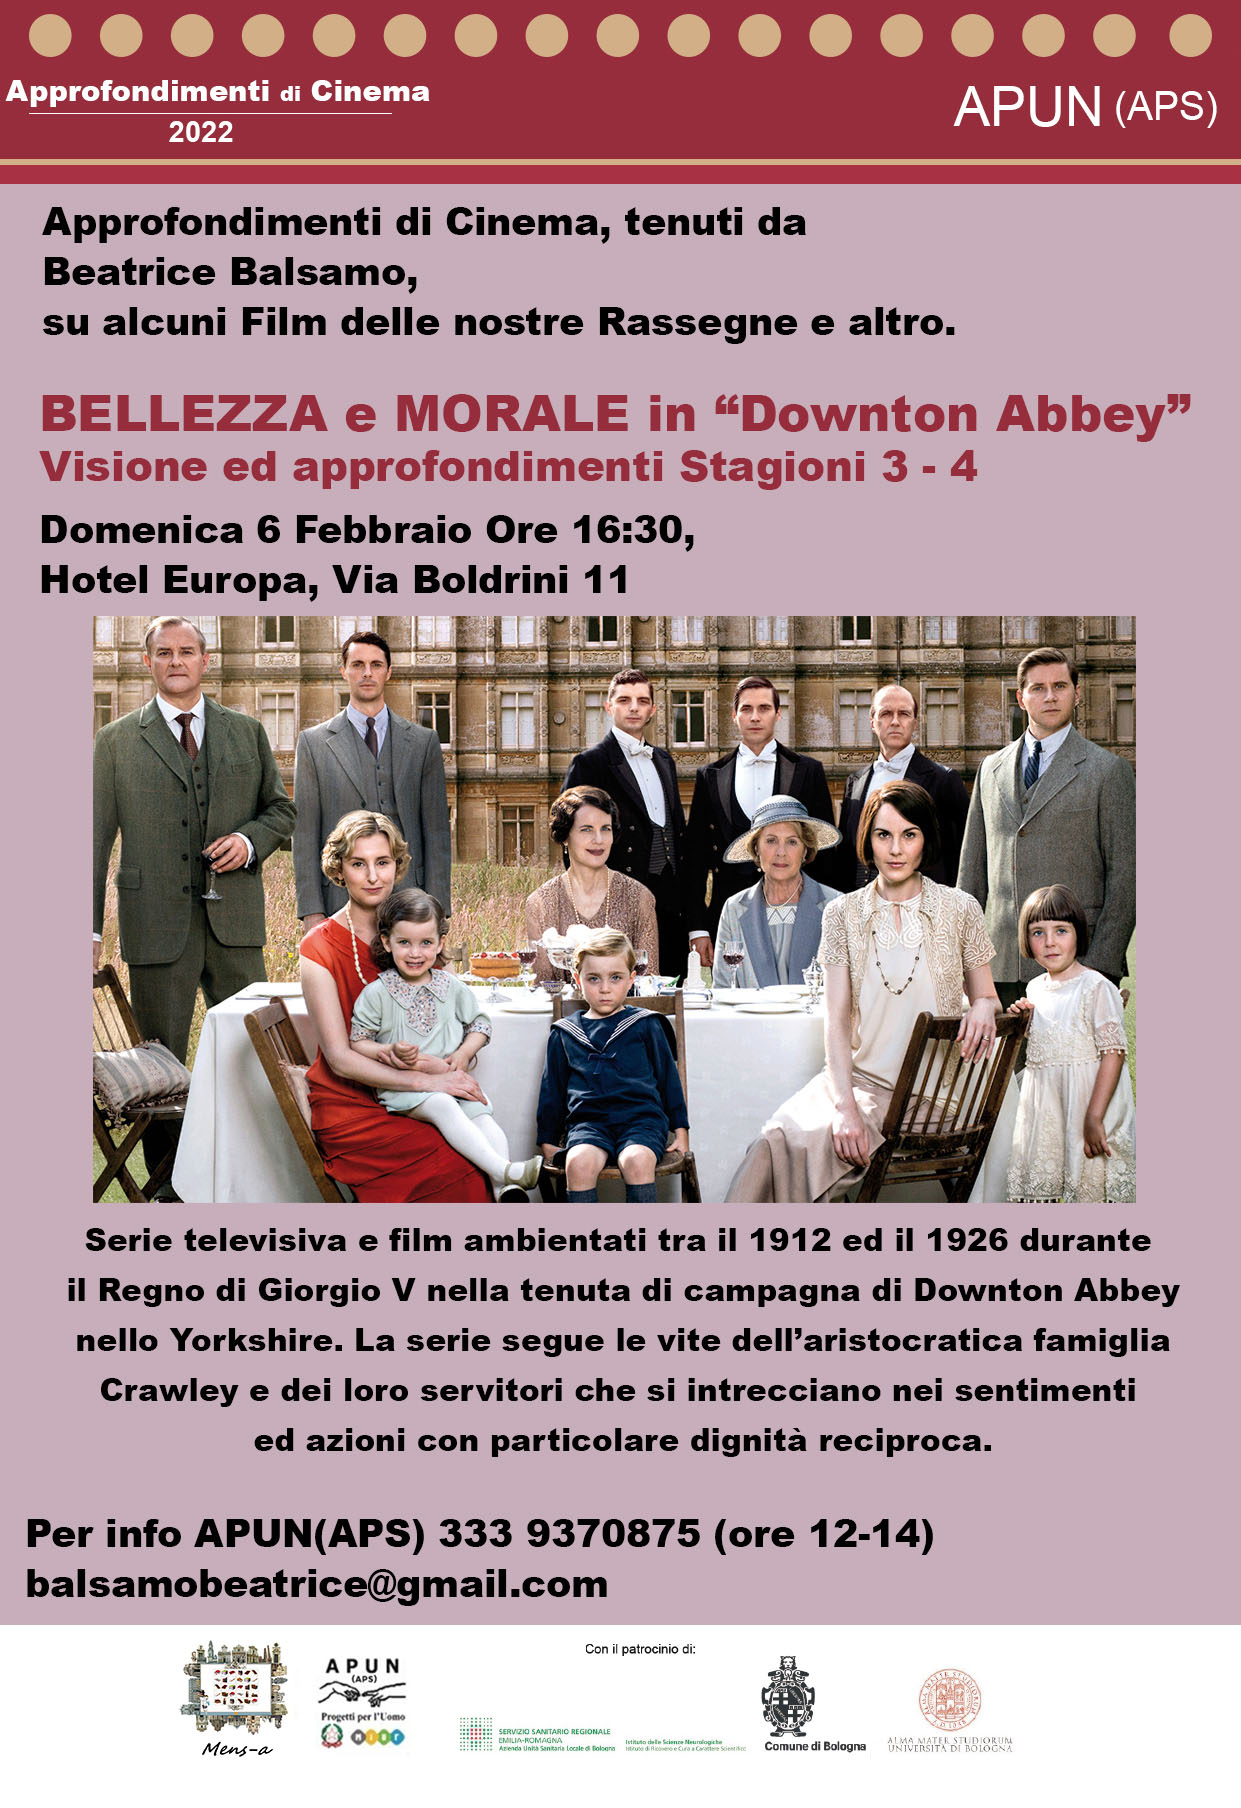 Approfondimenti di Cinema Downton Abbey 2022 